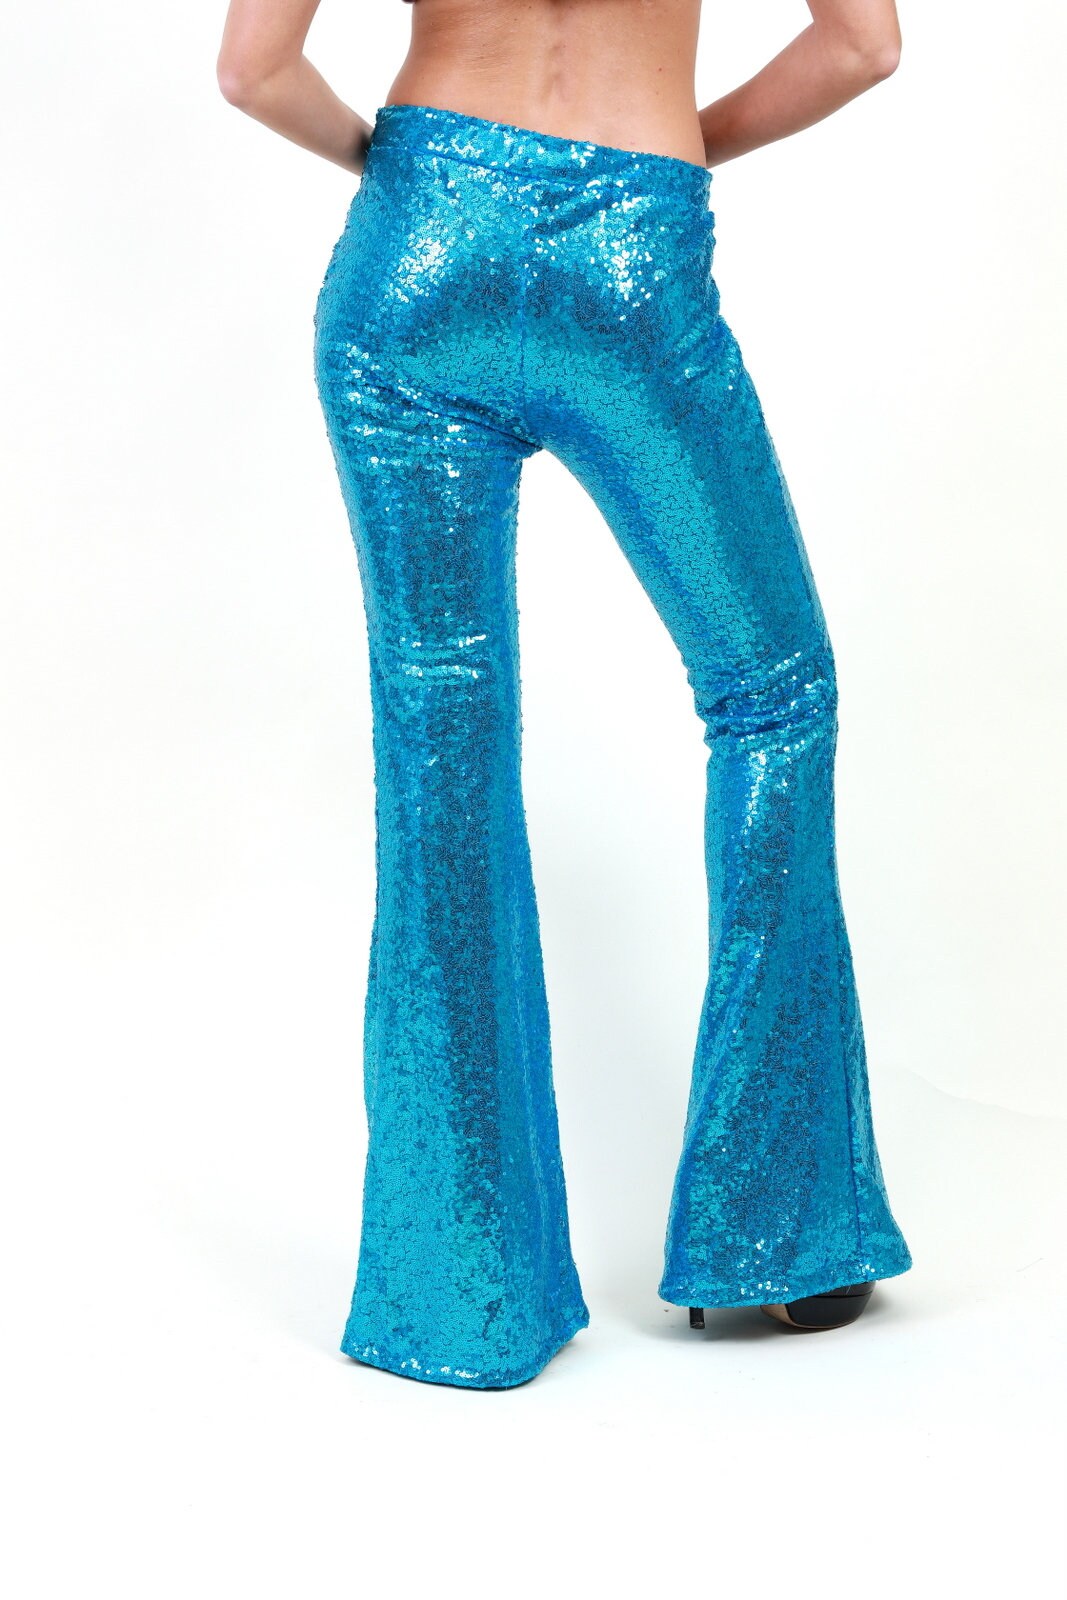 Blue Sequin Flare Pants Bell Bottoms Harem Pants Yoga | Etsy